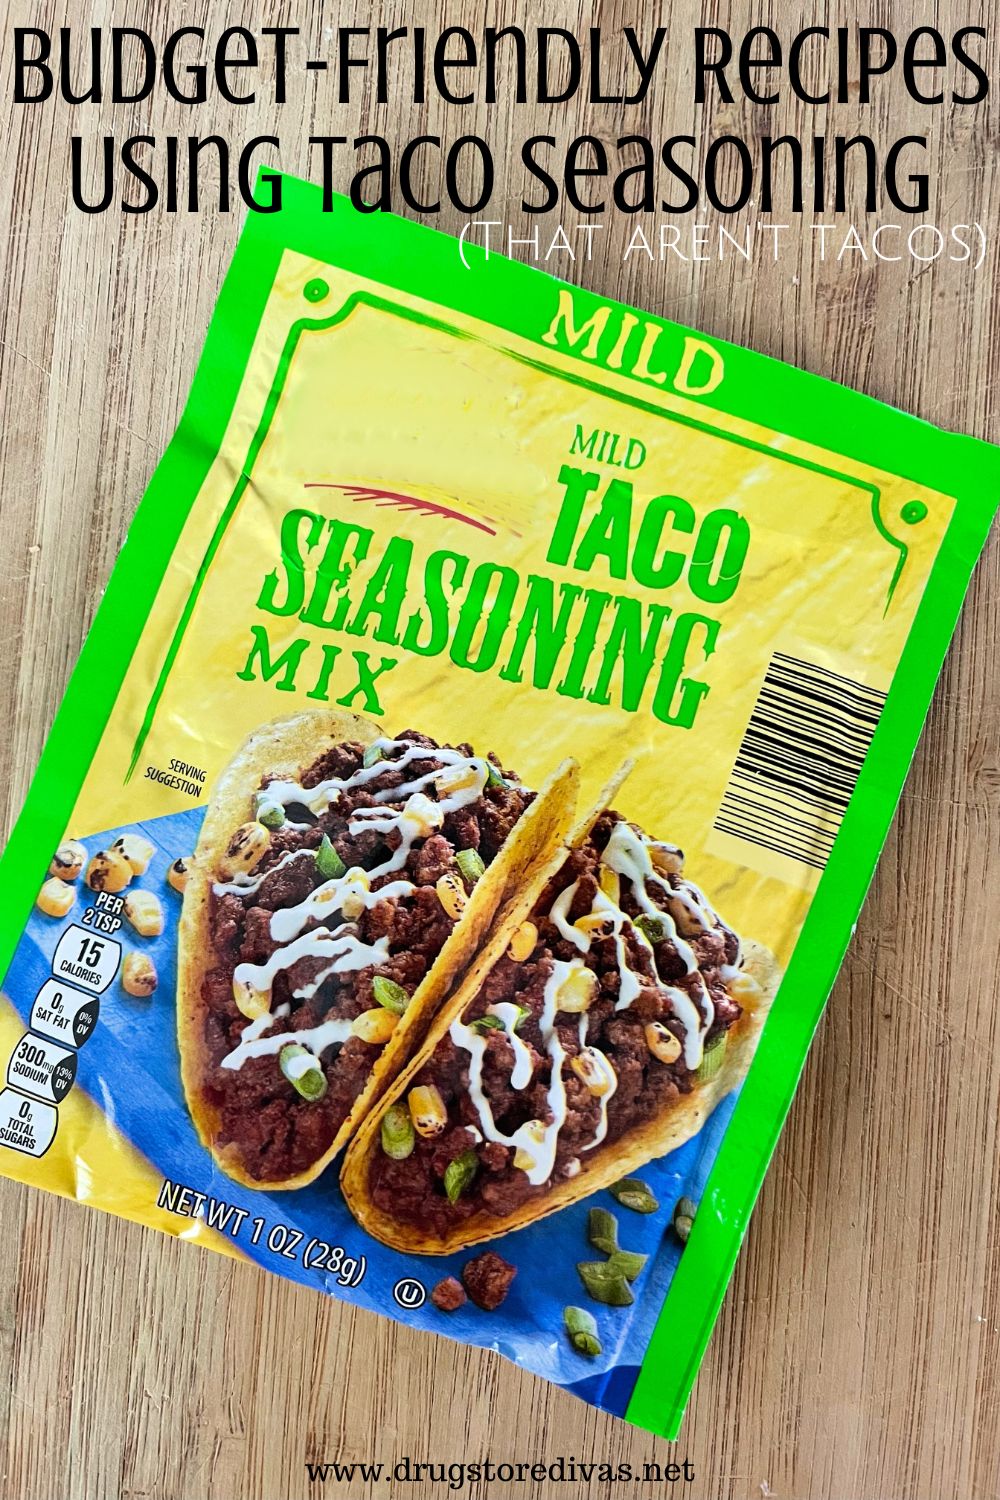 https://www.drugstoredivas.net/wp-content/uploads/2020/02/taco-seasoning-recipes-list-image.jpg